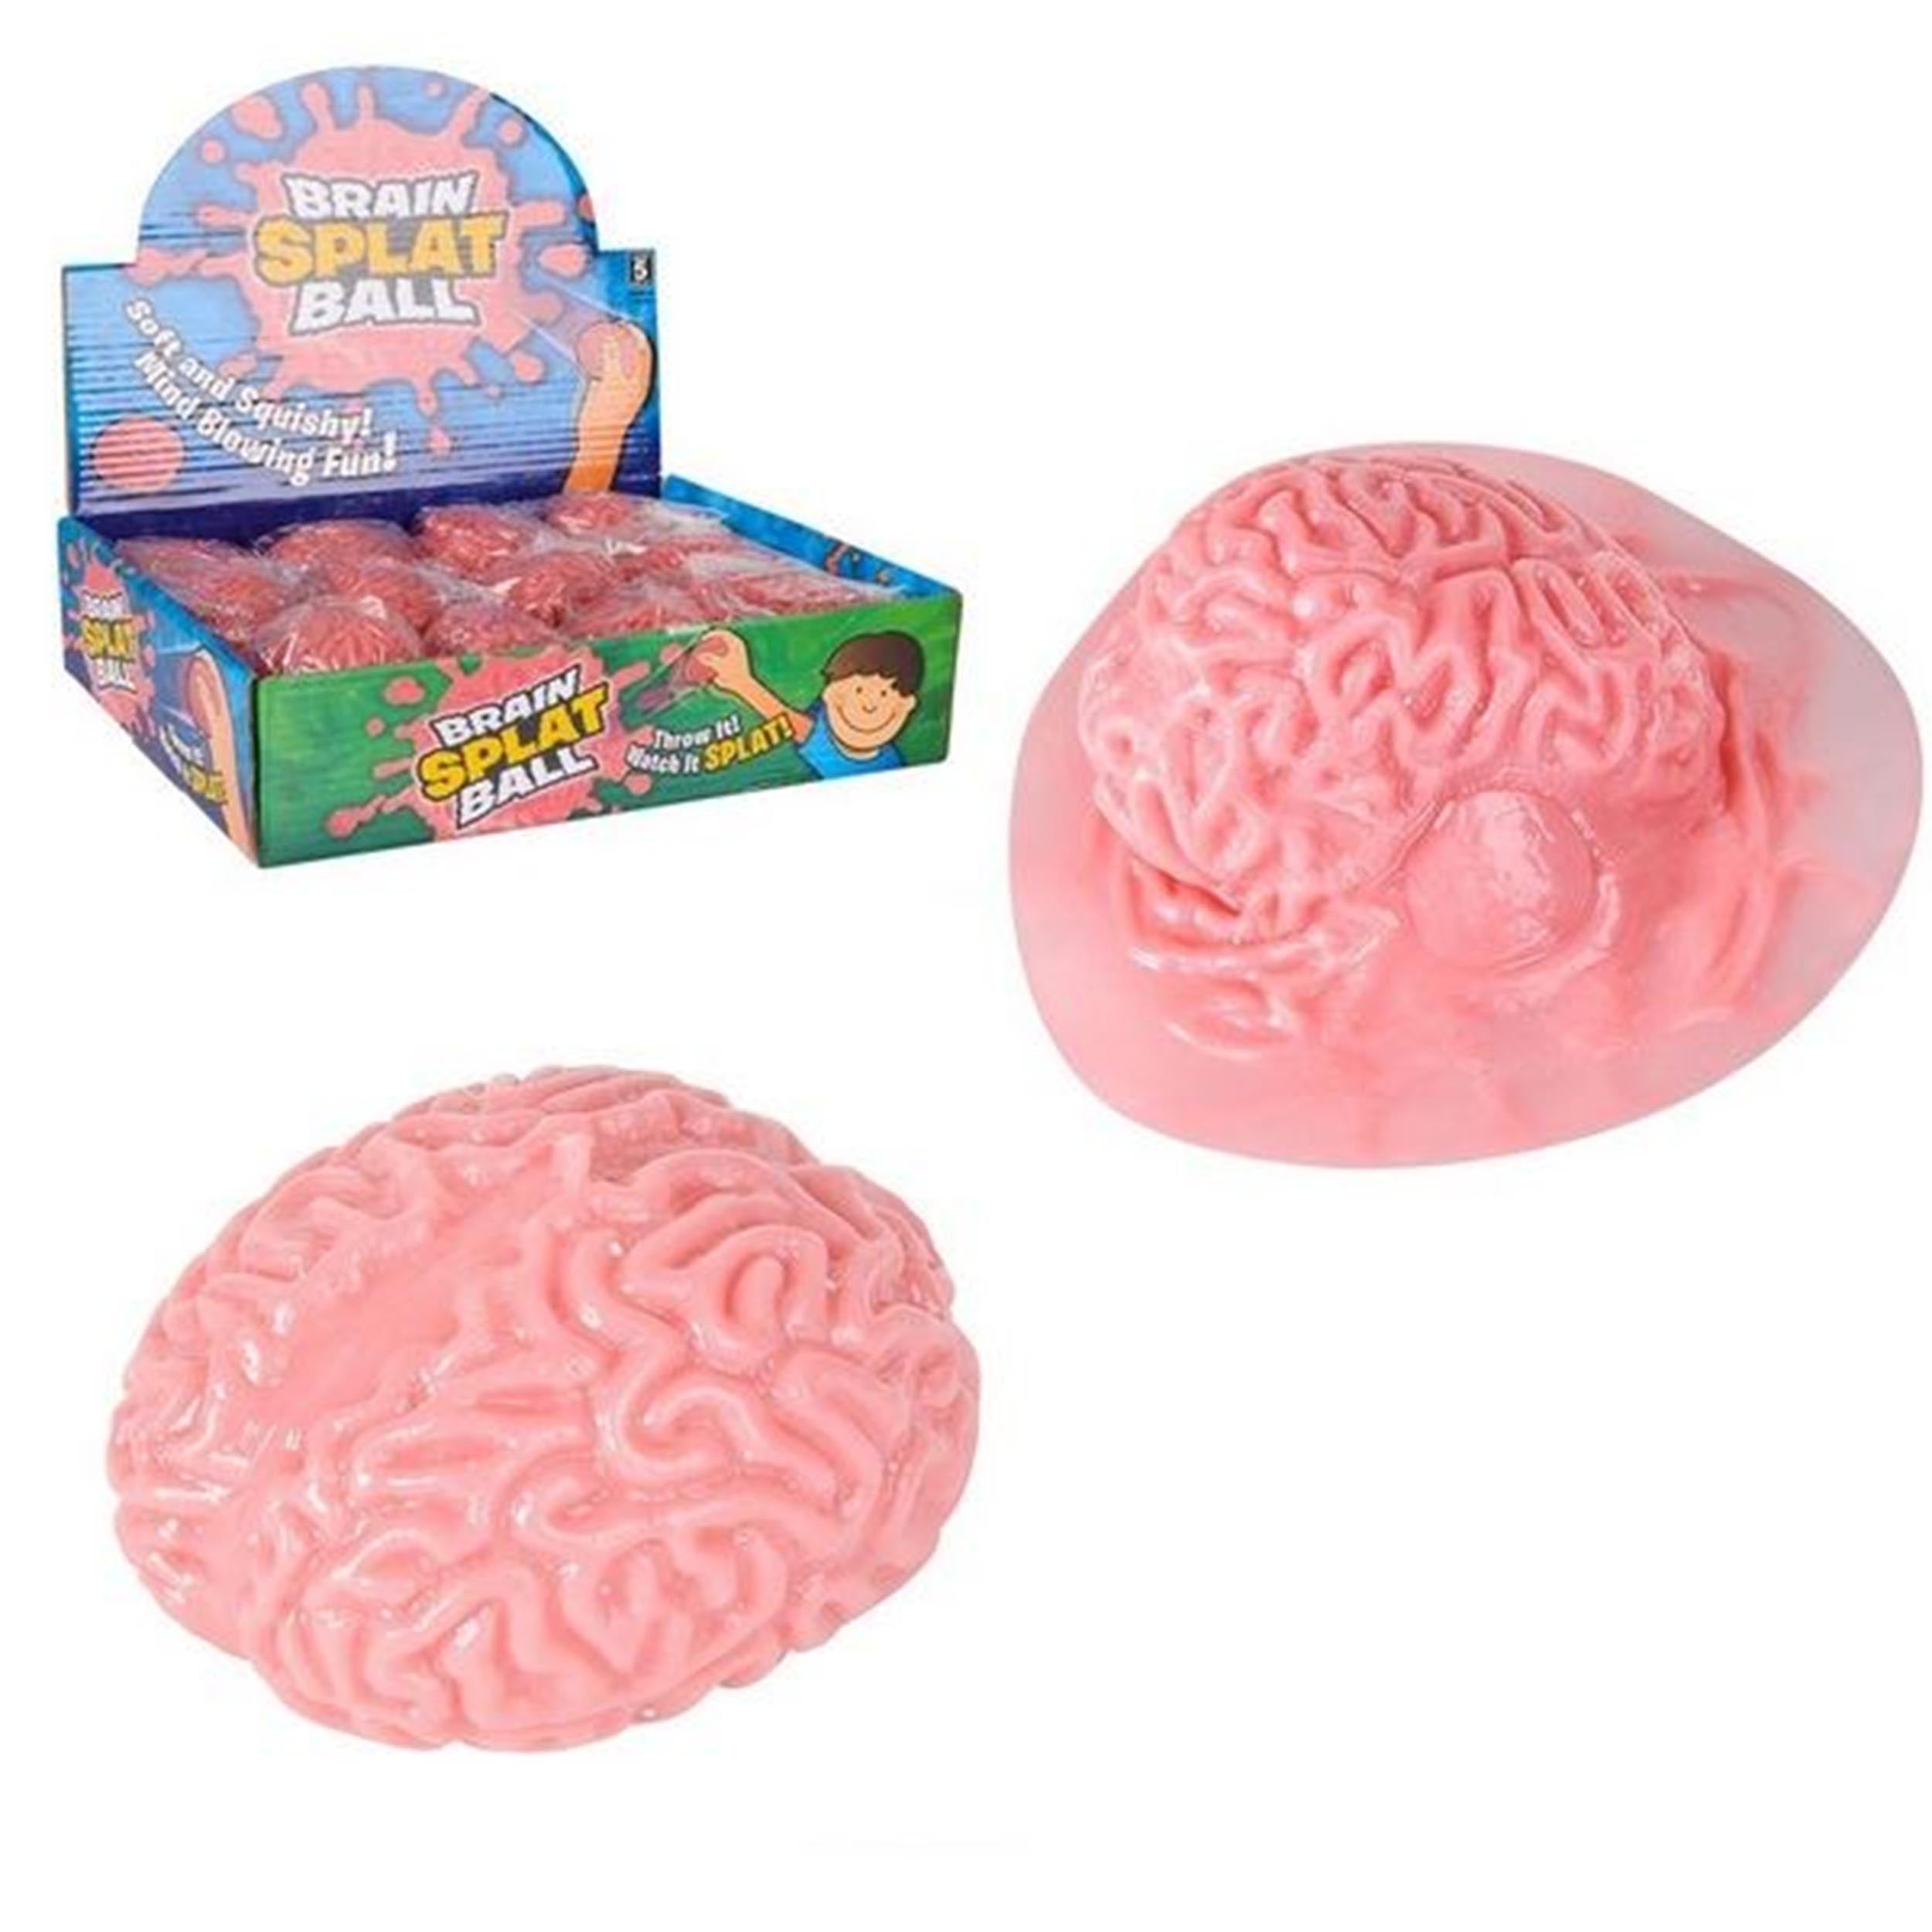 Splat Brain Ball kids toys (1 Dozen=$15.99)